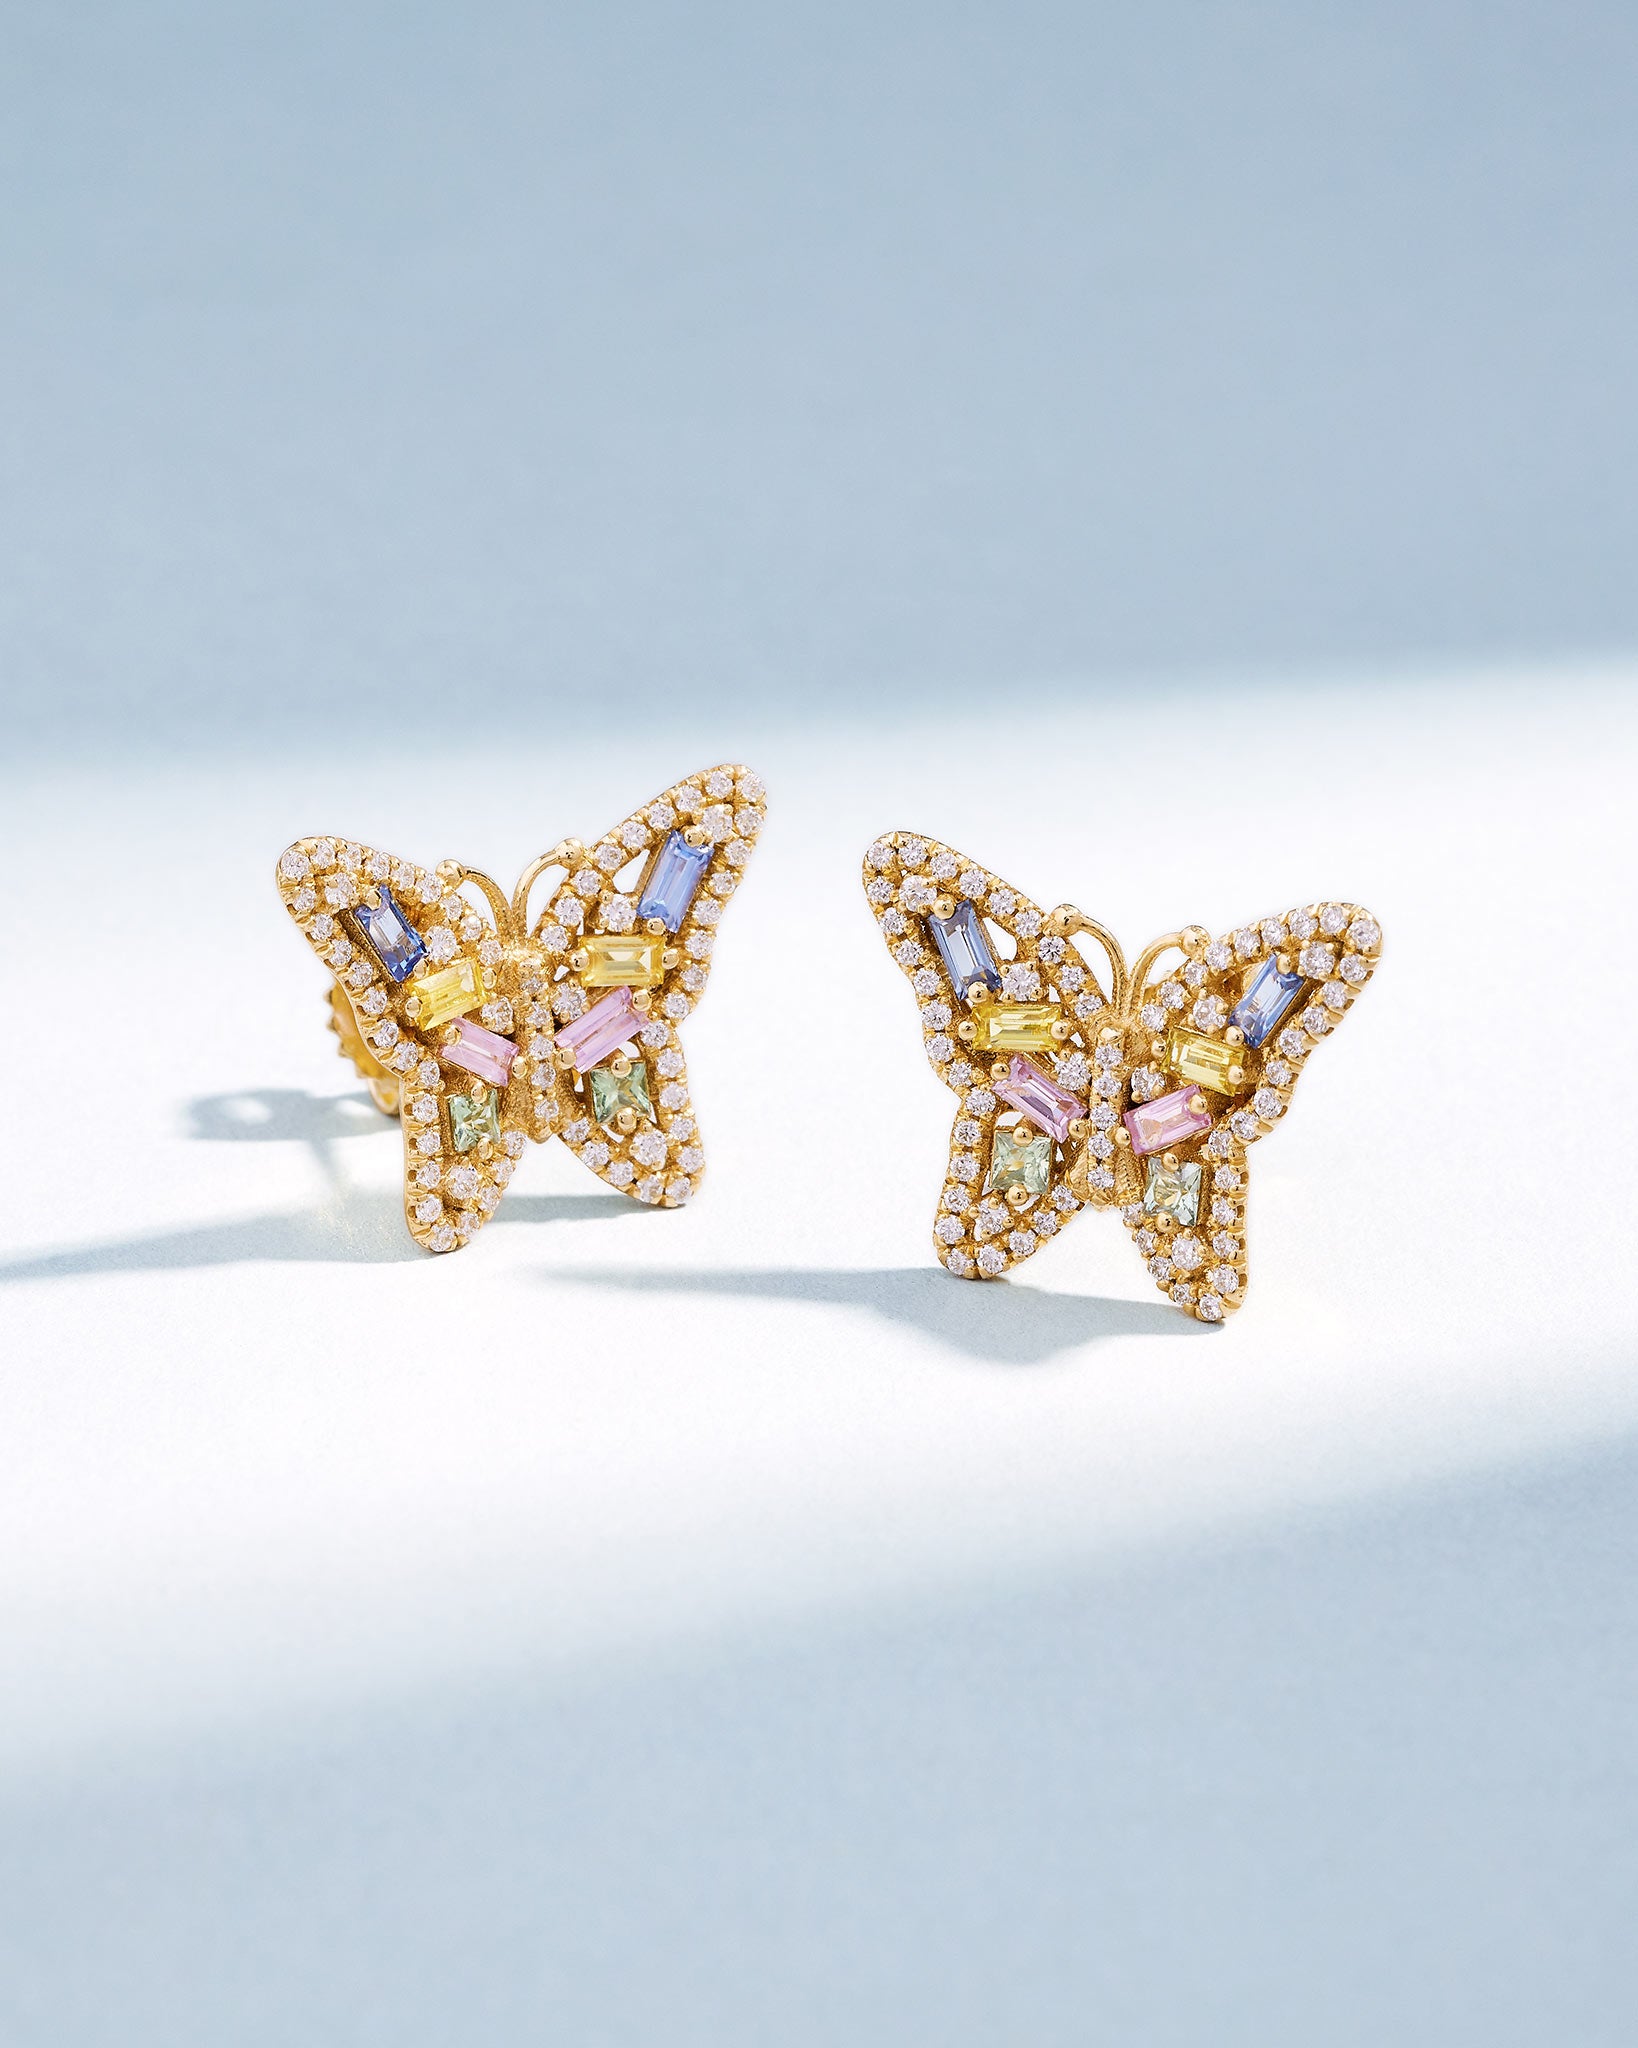 Suzanne Kalan Small Butterfly Pastel Sapphire Stud Earrings in 18k yellow gold